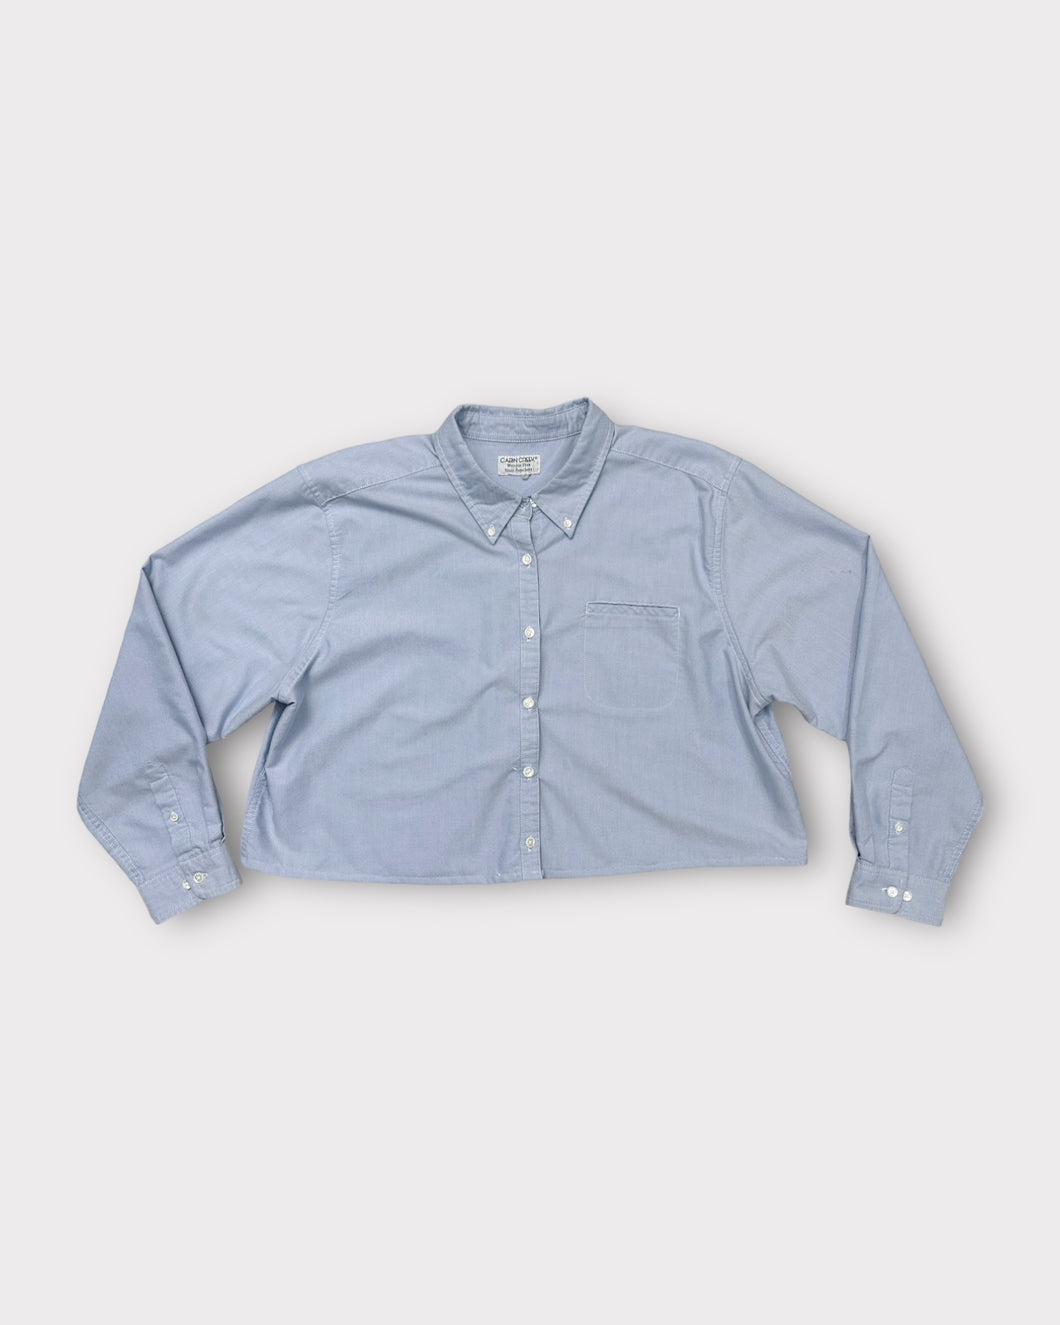 Cabin Creek Cropped Blue Button Up Shirt (L)